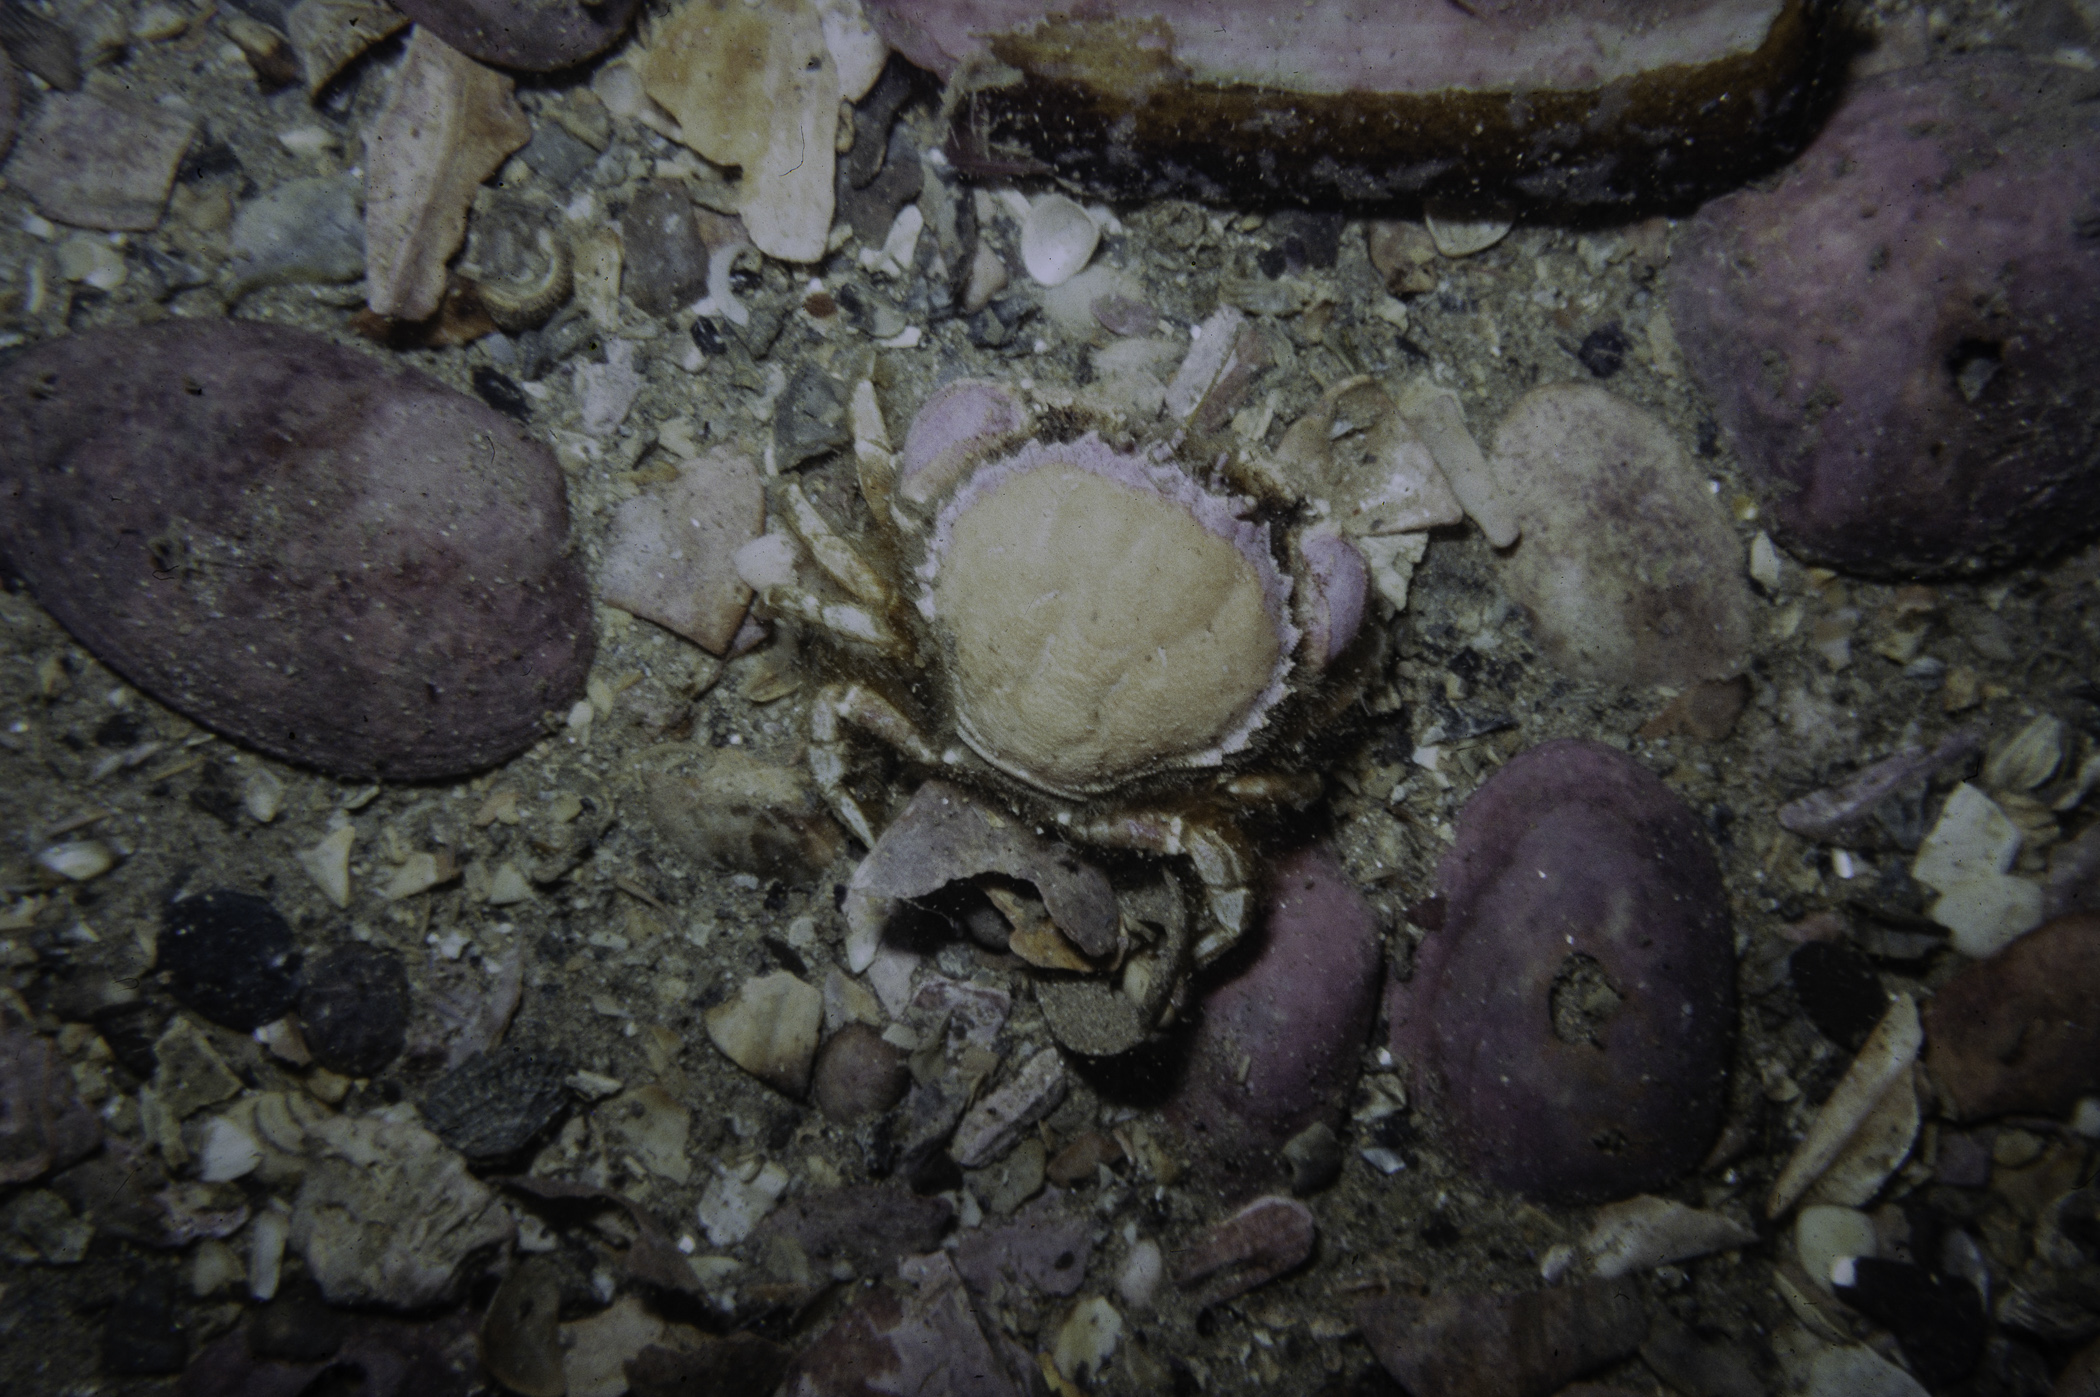 Atelecyclus rotundatus. Site: 900m N of Curran Strand, Skerries, Portrush. 